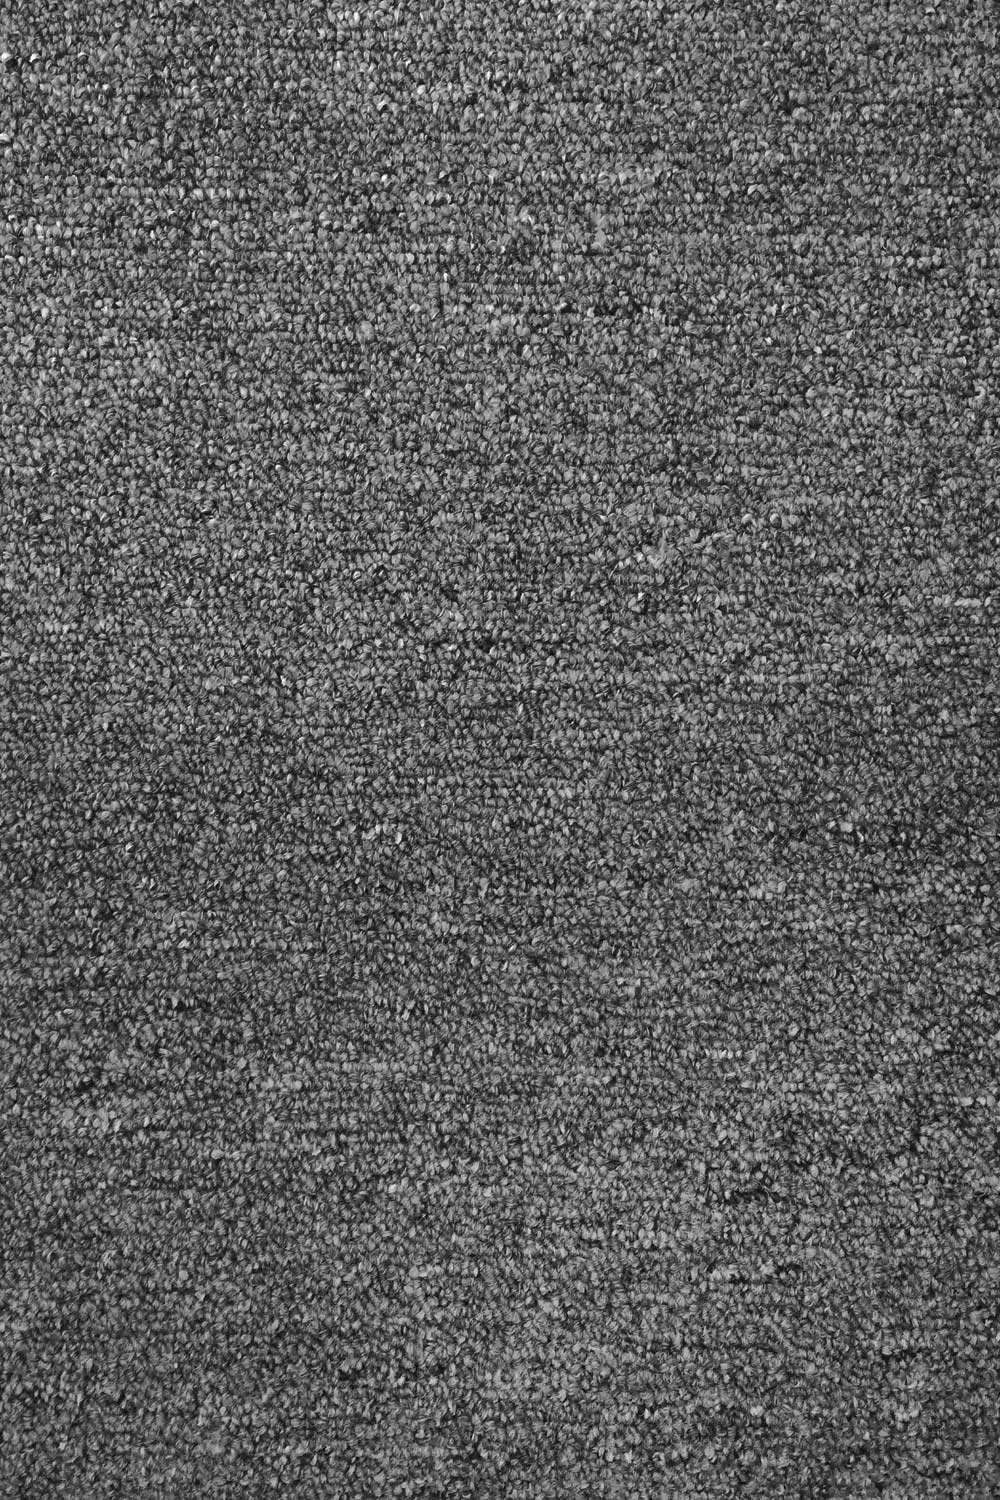 Metrážny koberec RAMBO-BET 78 300 cm